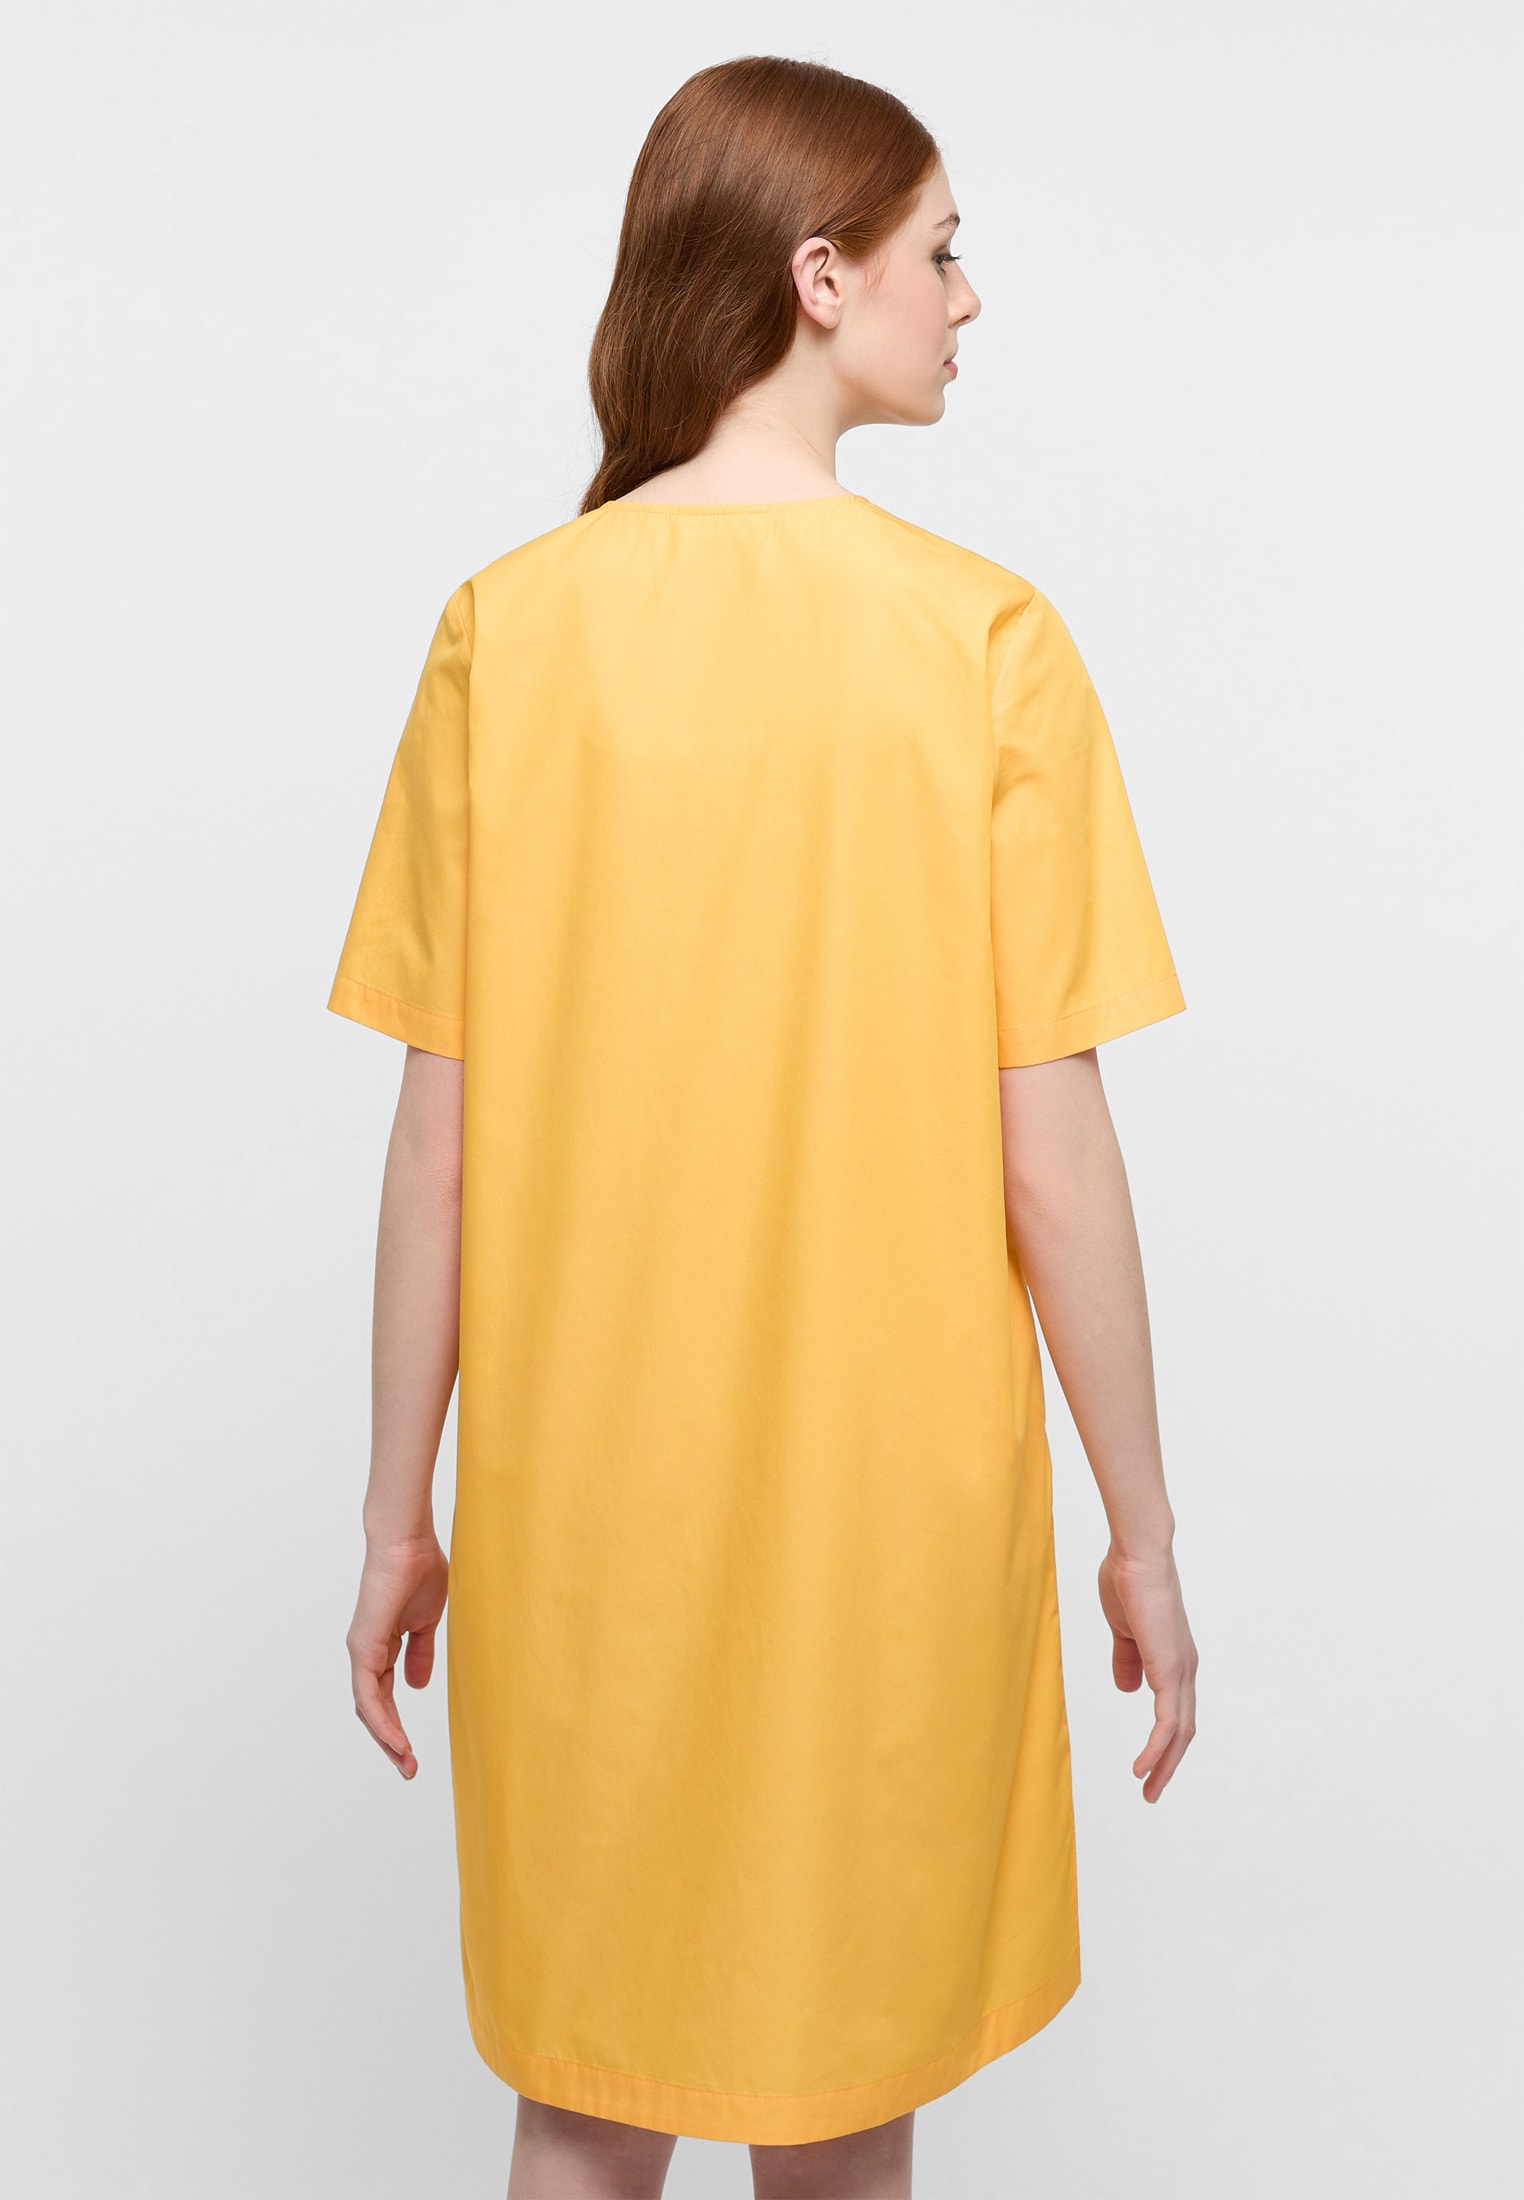 Shirt dress in mandarin plain sleeve 42 | | | mandarin 2DR00211-08-21-42-1/2 short 